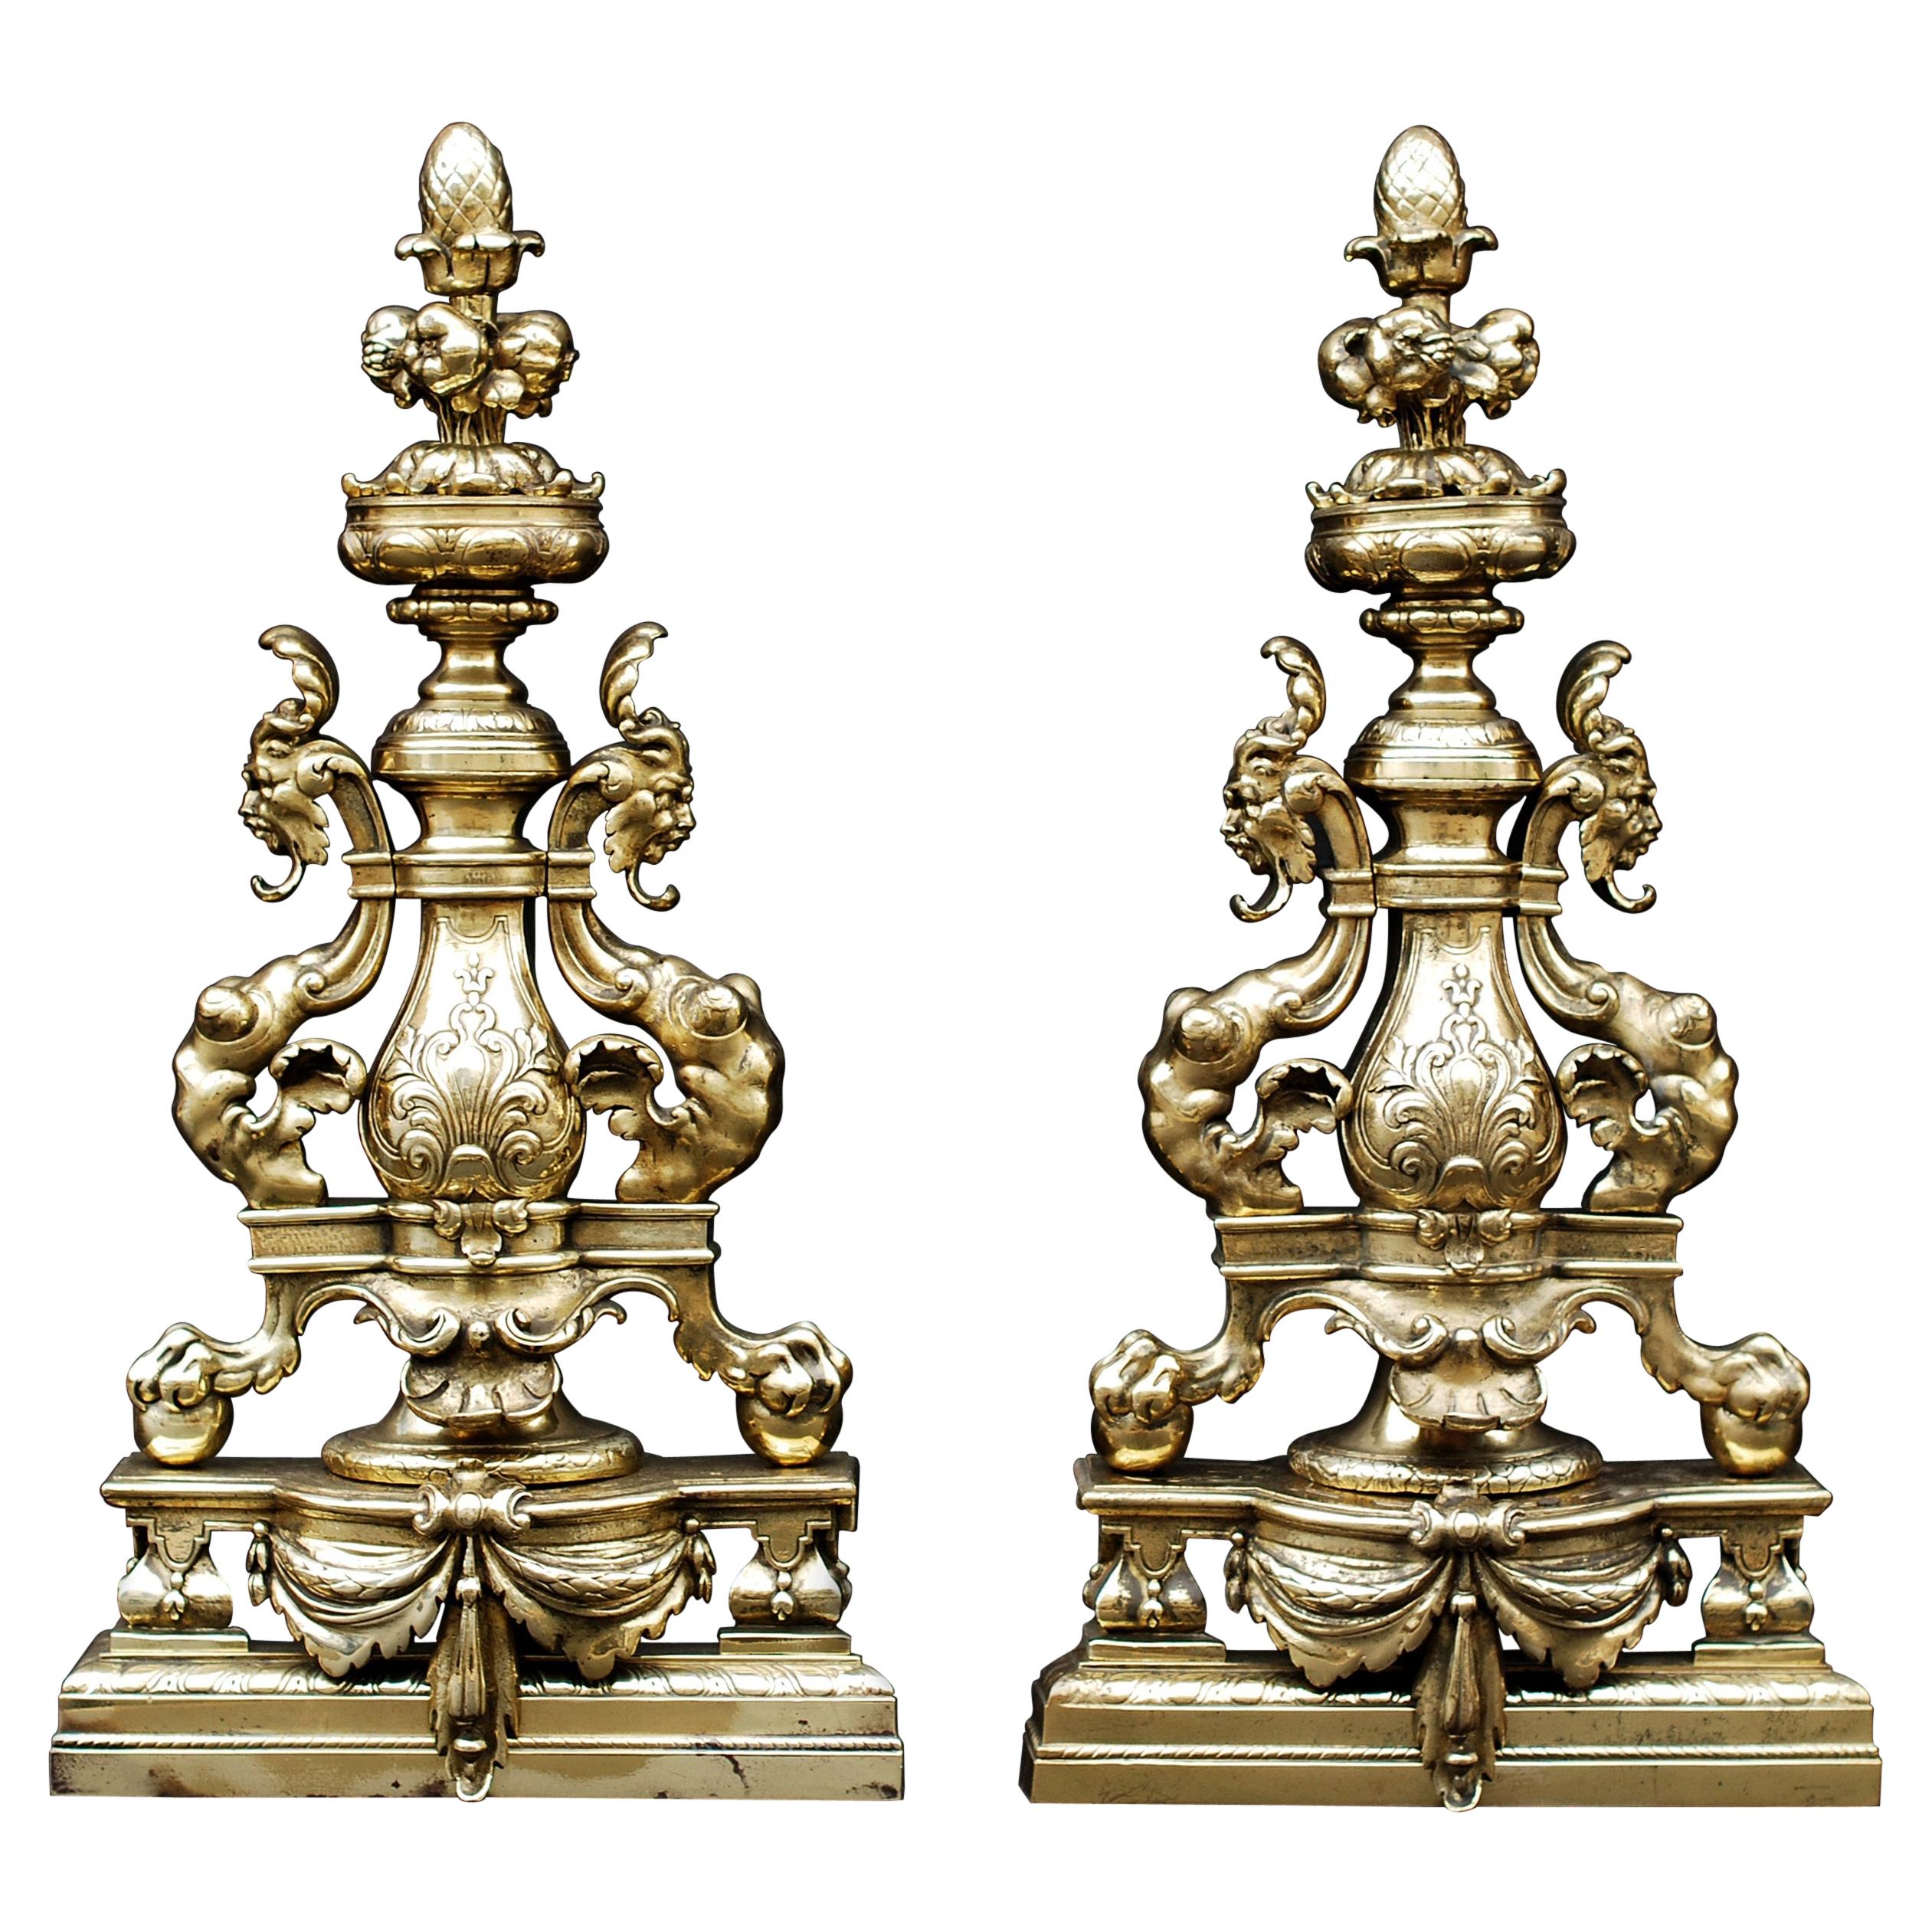 Pair of Ornate English 19th Century Andirons